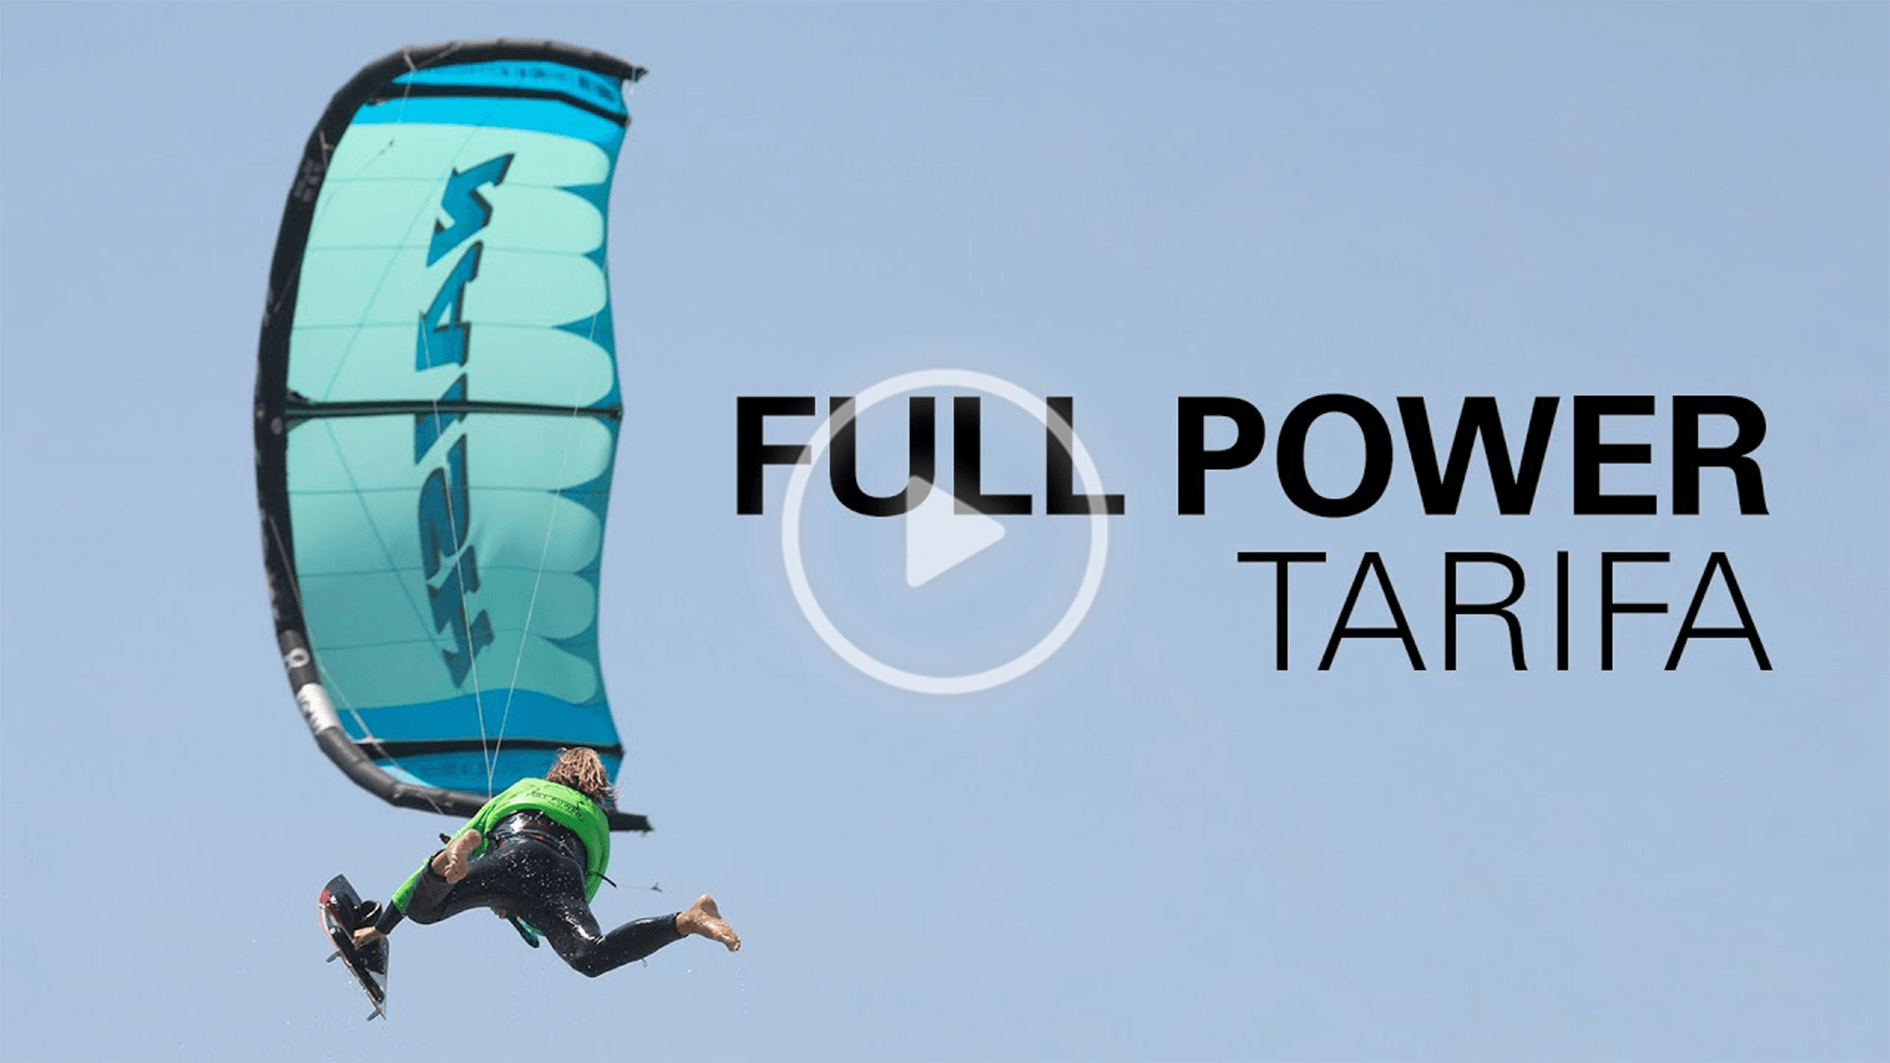 naish full play - Full Power Tarifa recap with Naish Kiteboarding